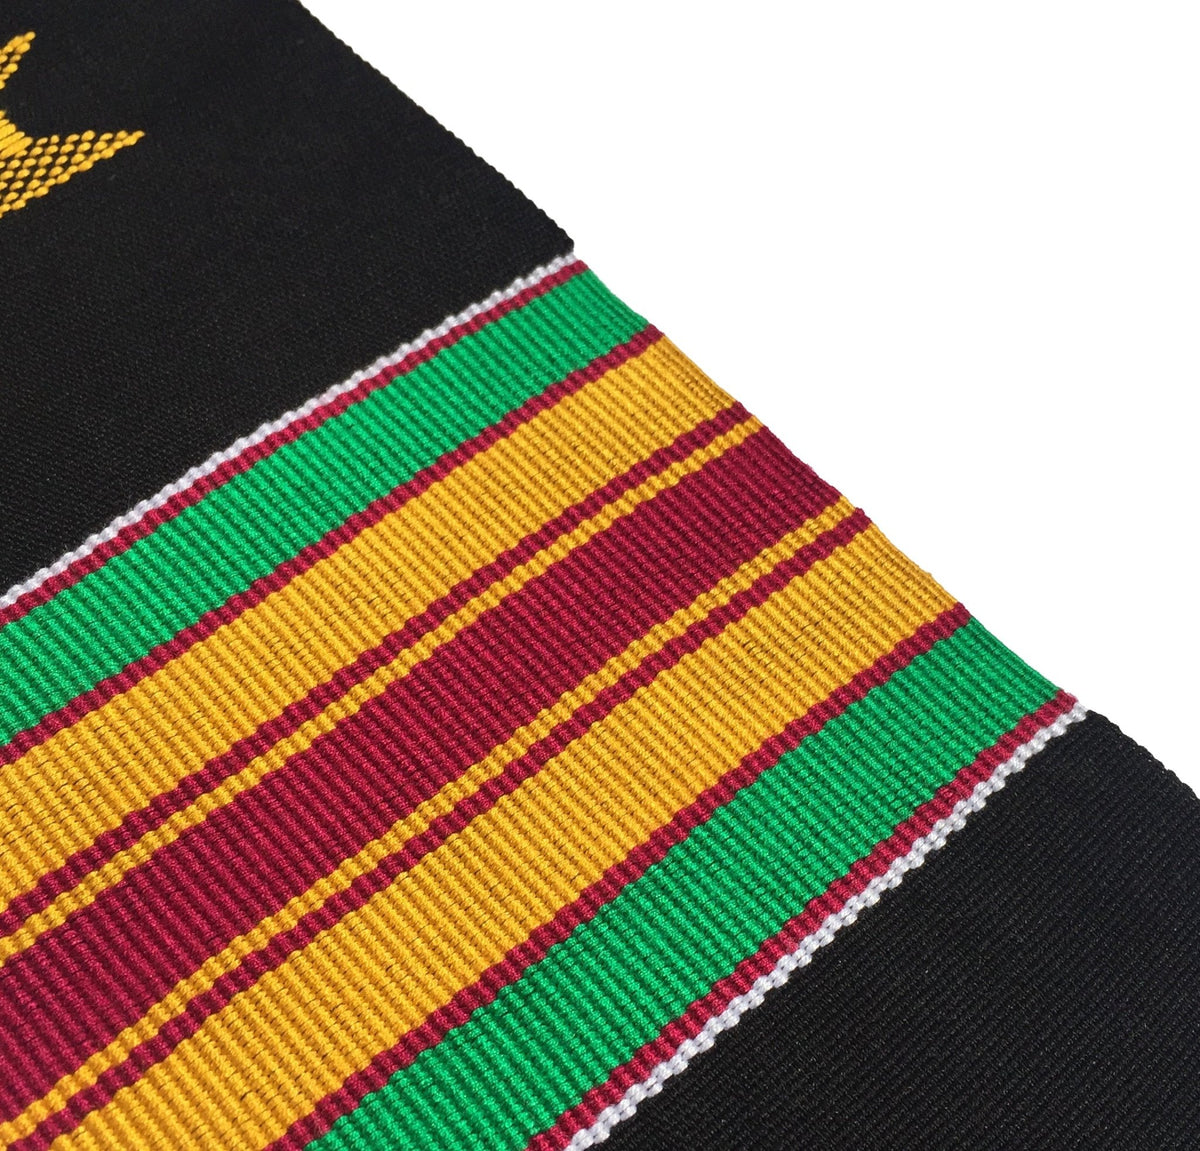 advansync Traditional Double Weave Kente Cloth (Multicolor)